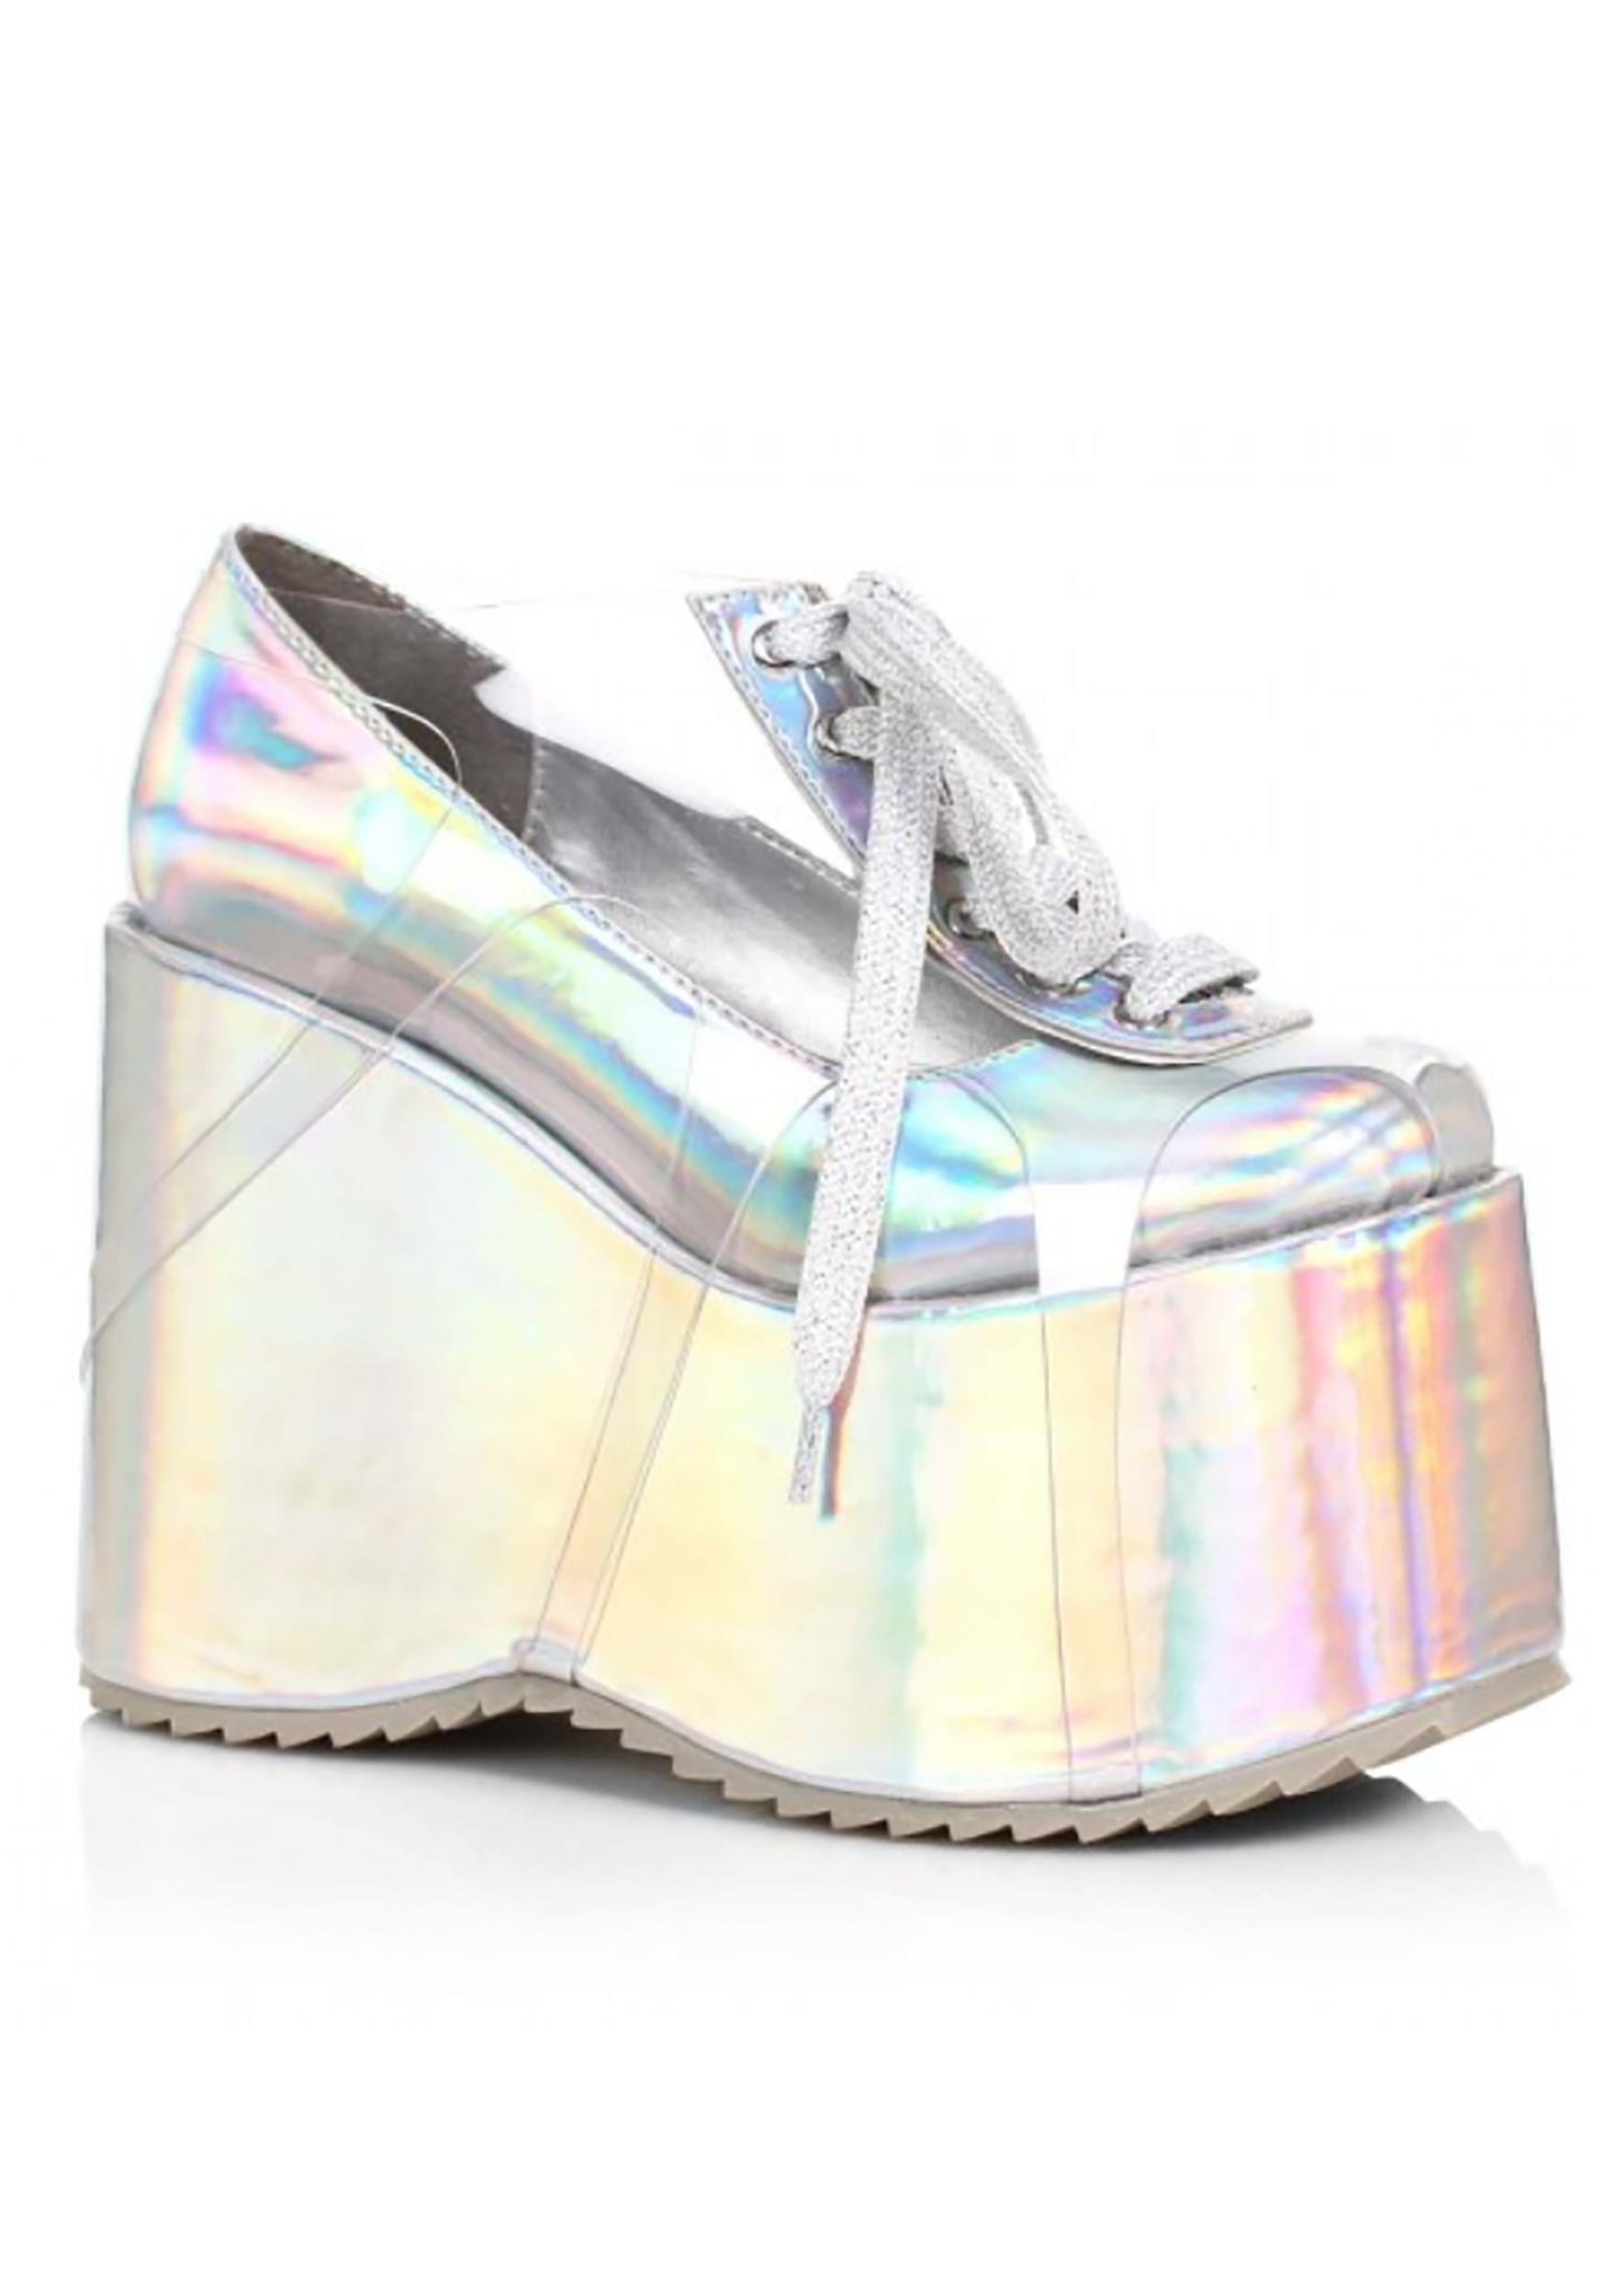 https://images.halloweencostumes.eu/products/81864/1-1/womens-hologram-platform-shoes.jpg